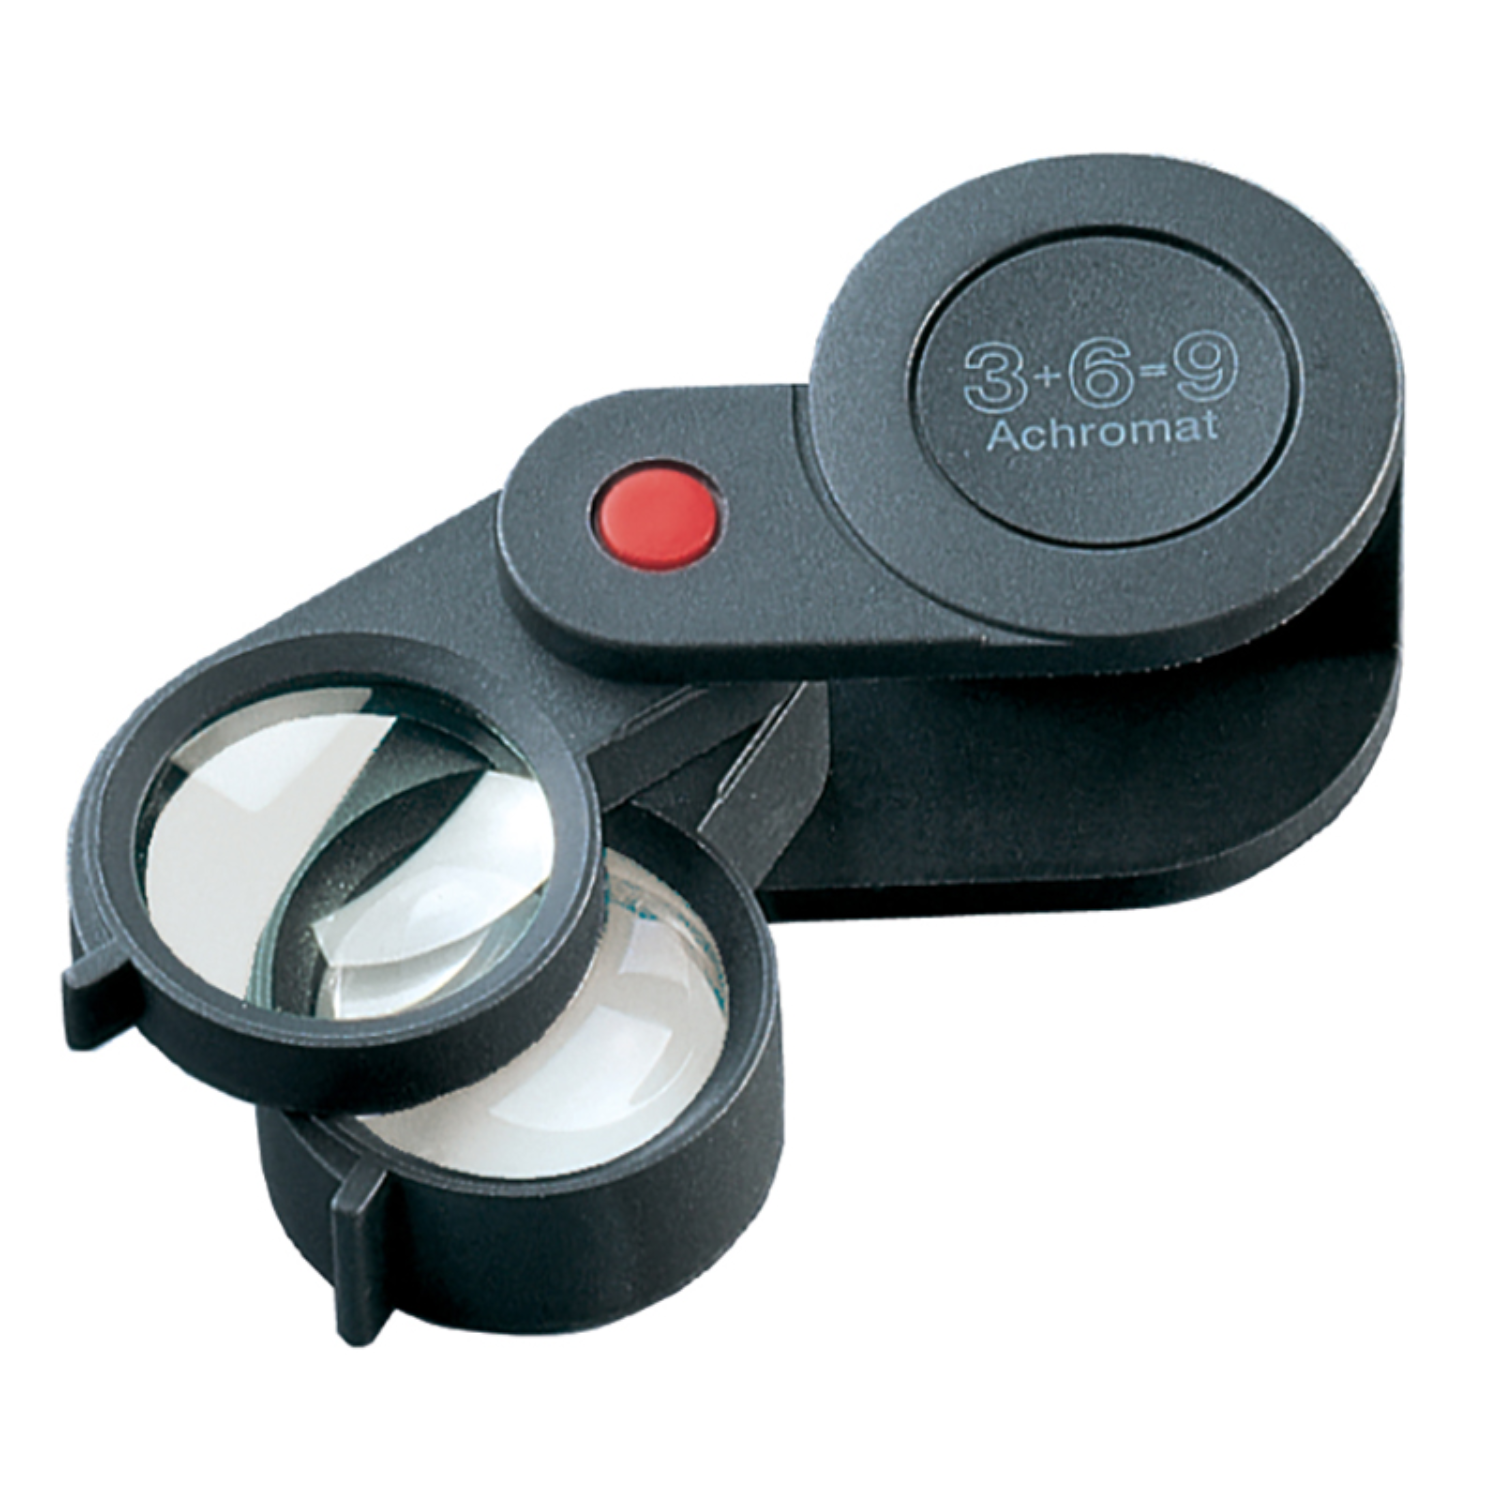 Magnifier - 5x 1 1/2 Folding Pocket Magnifier